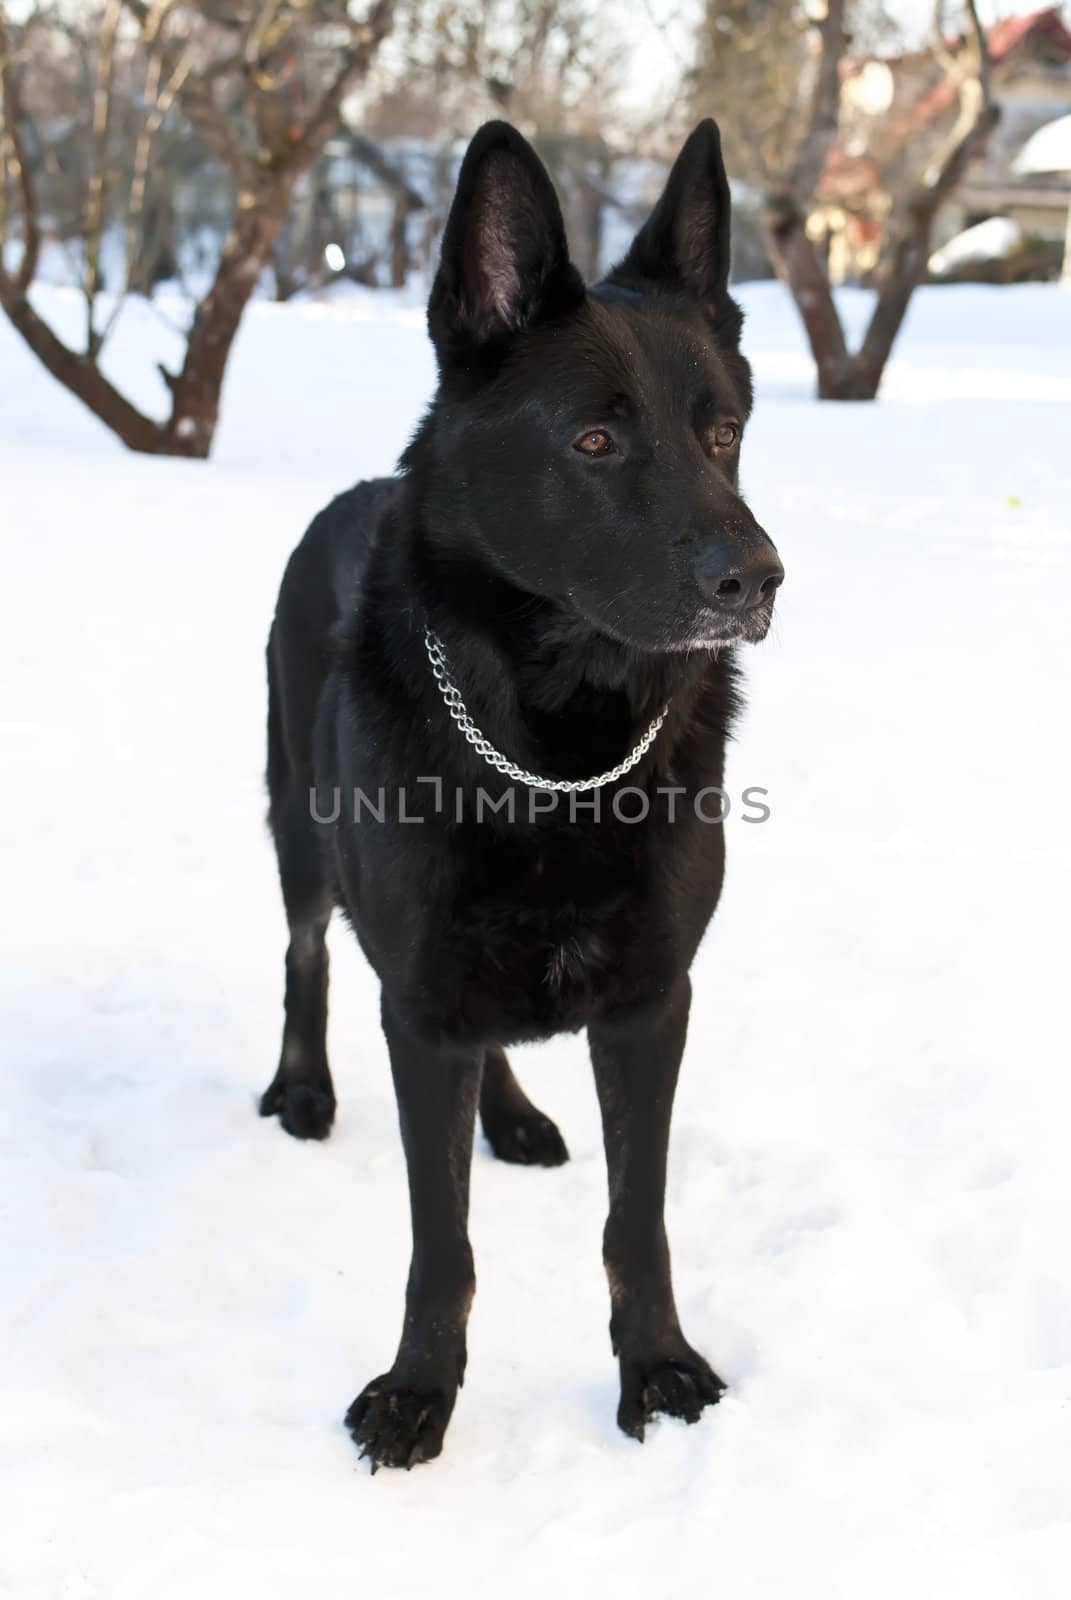 Black shepherd in the snow in winter